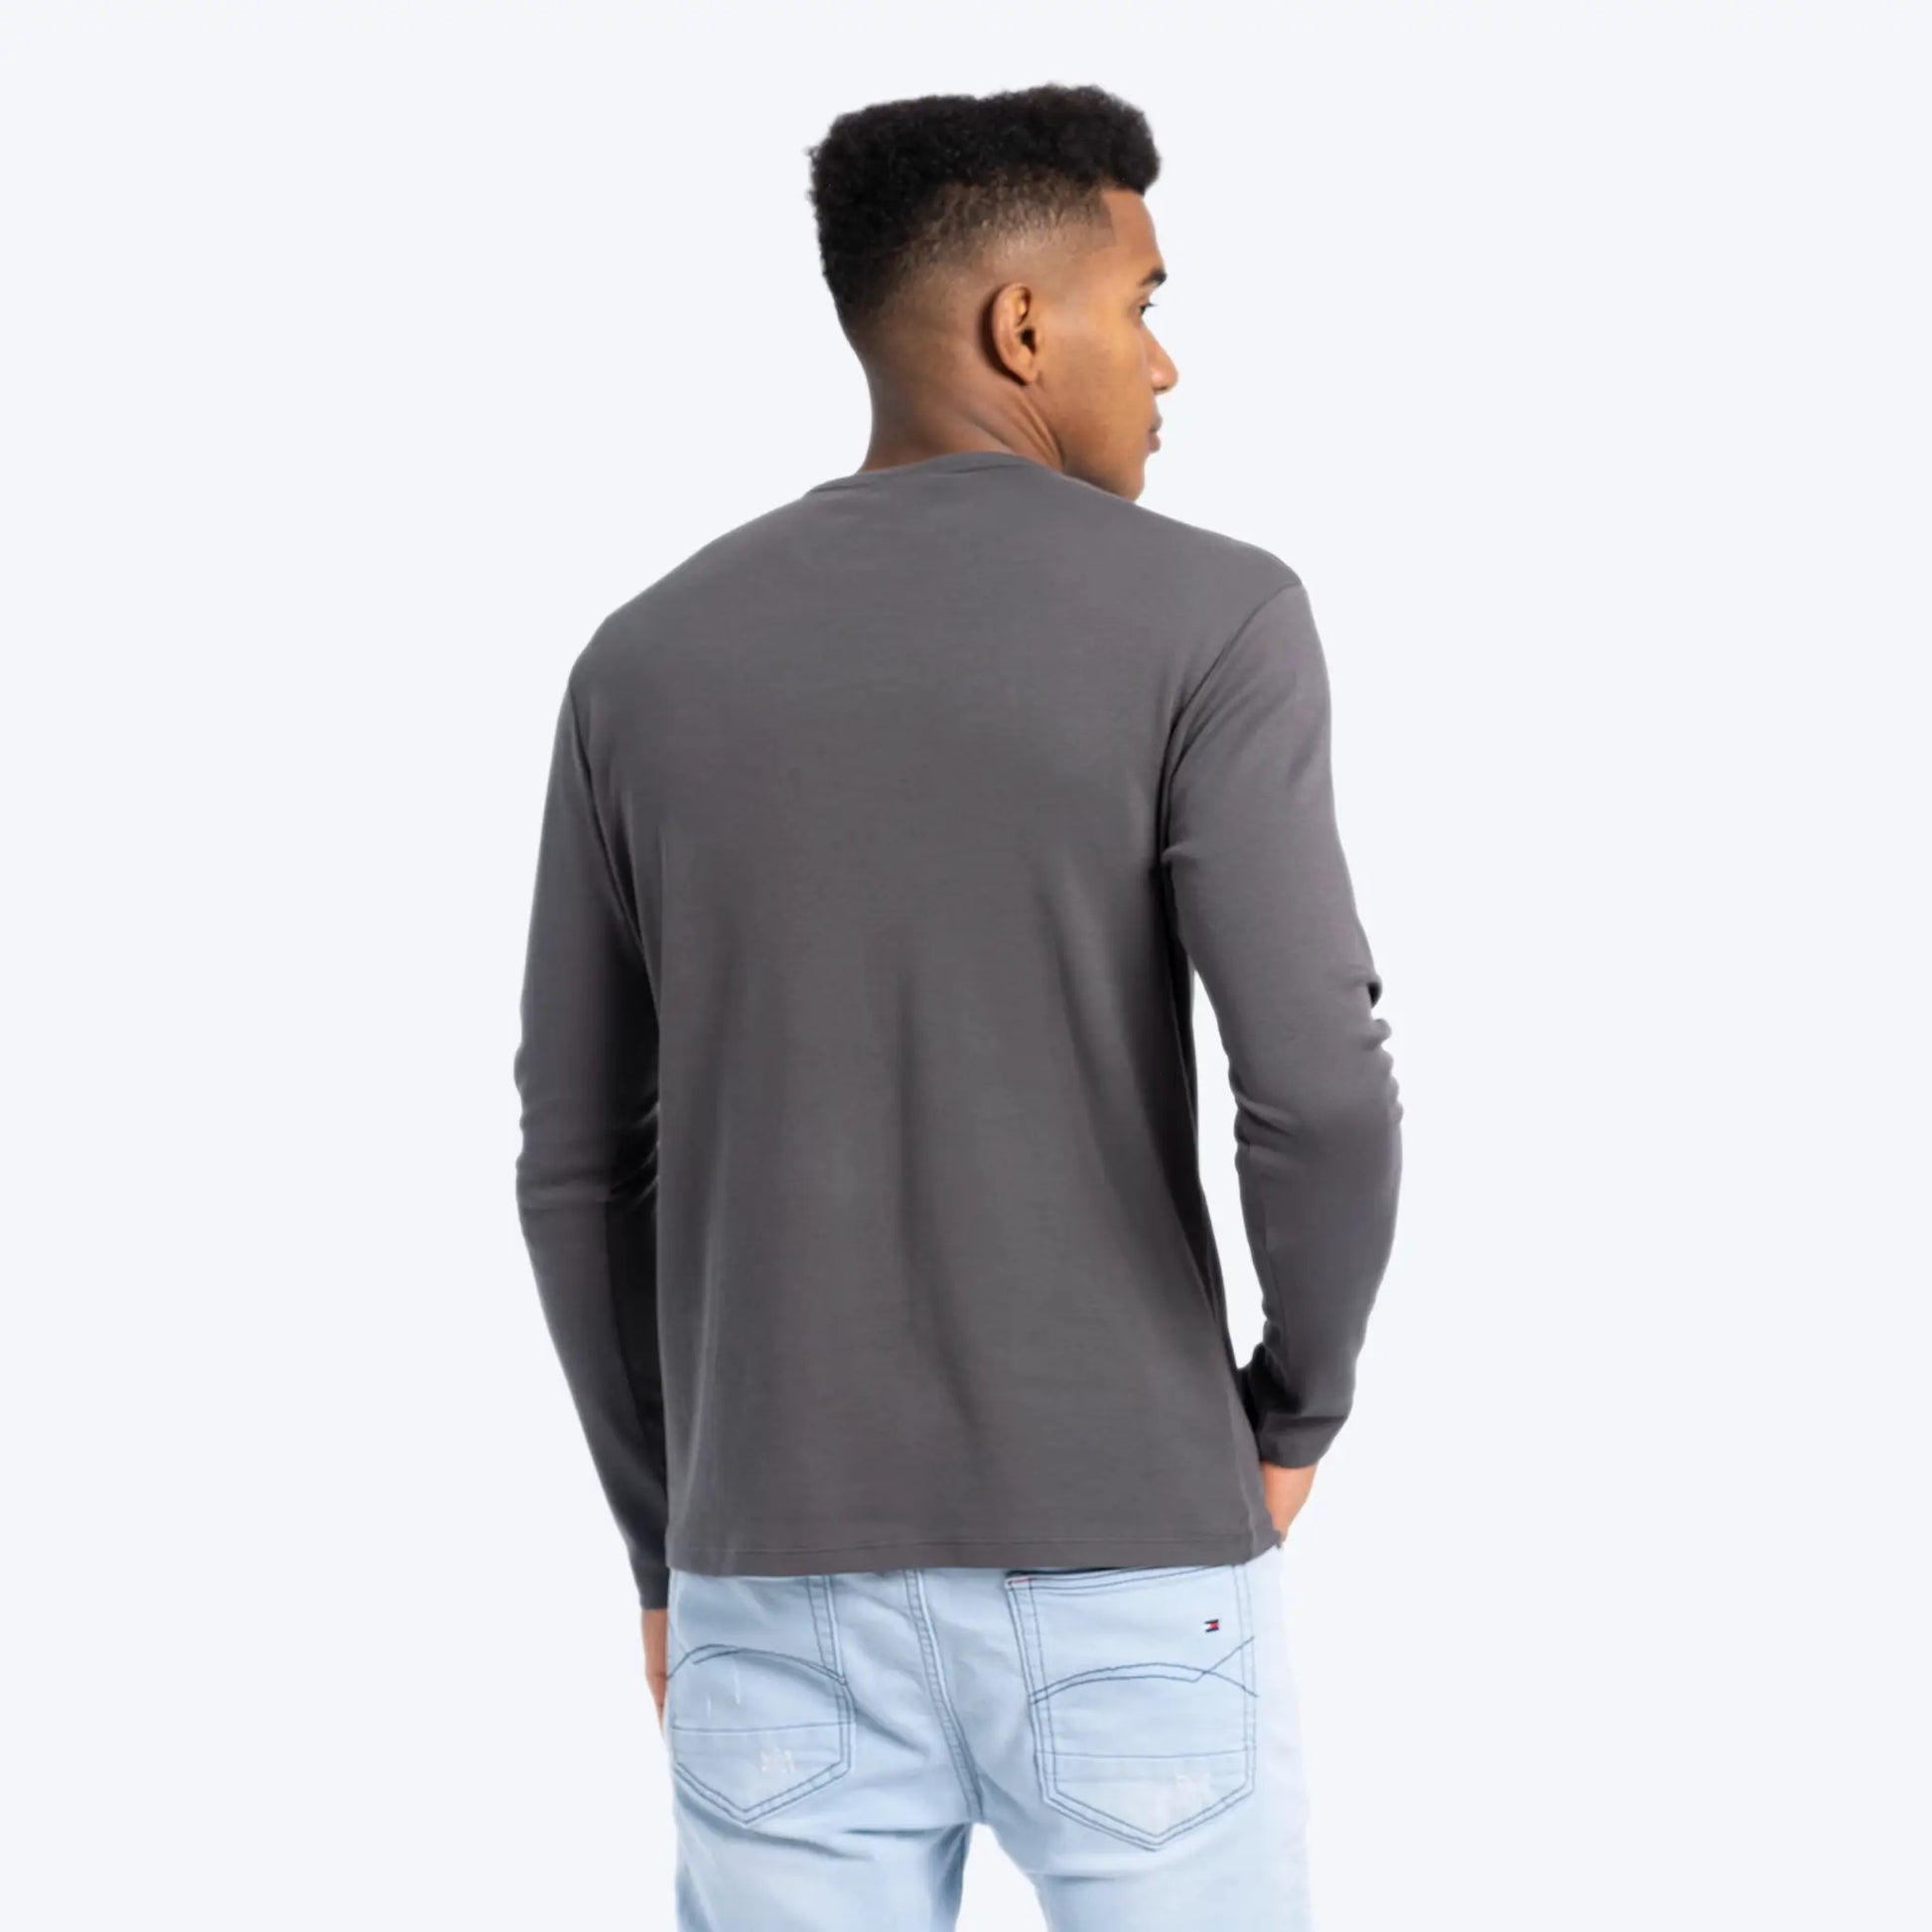 mens eco friendly tshirt long sleeve color gray